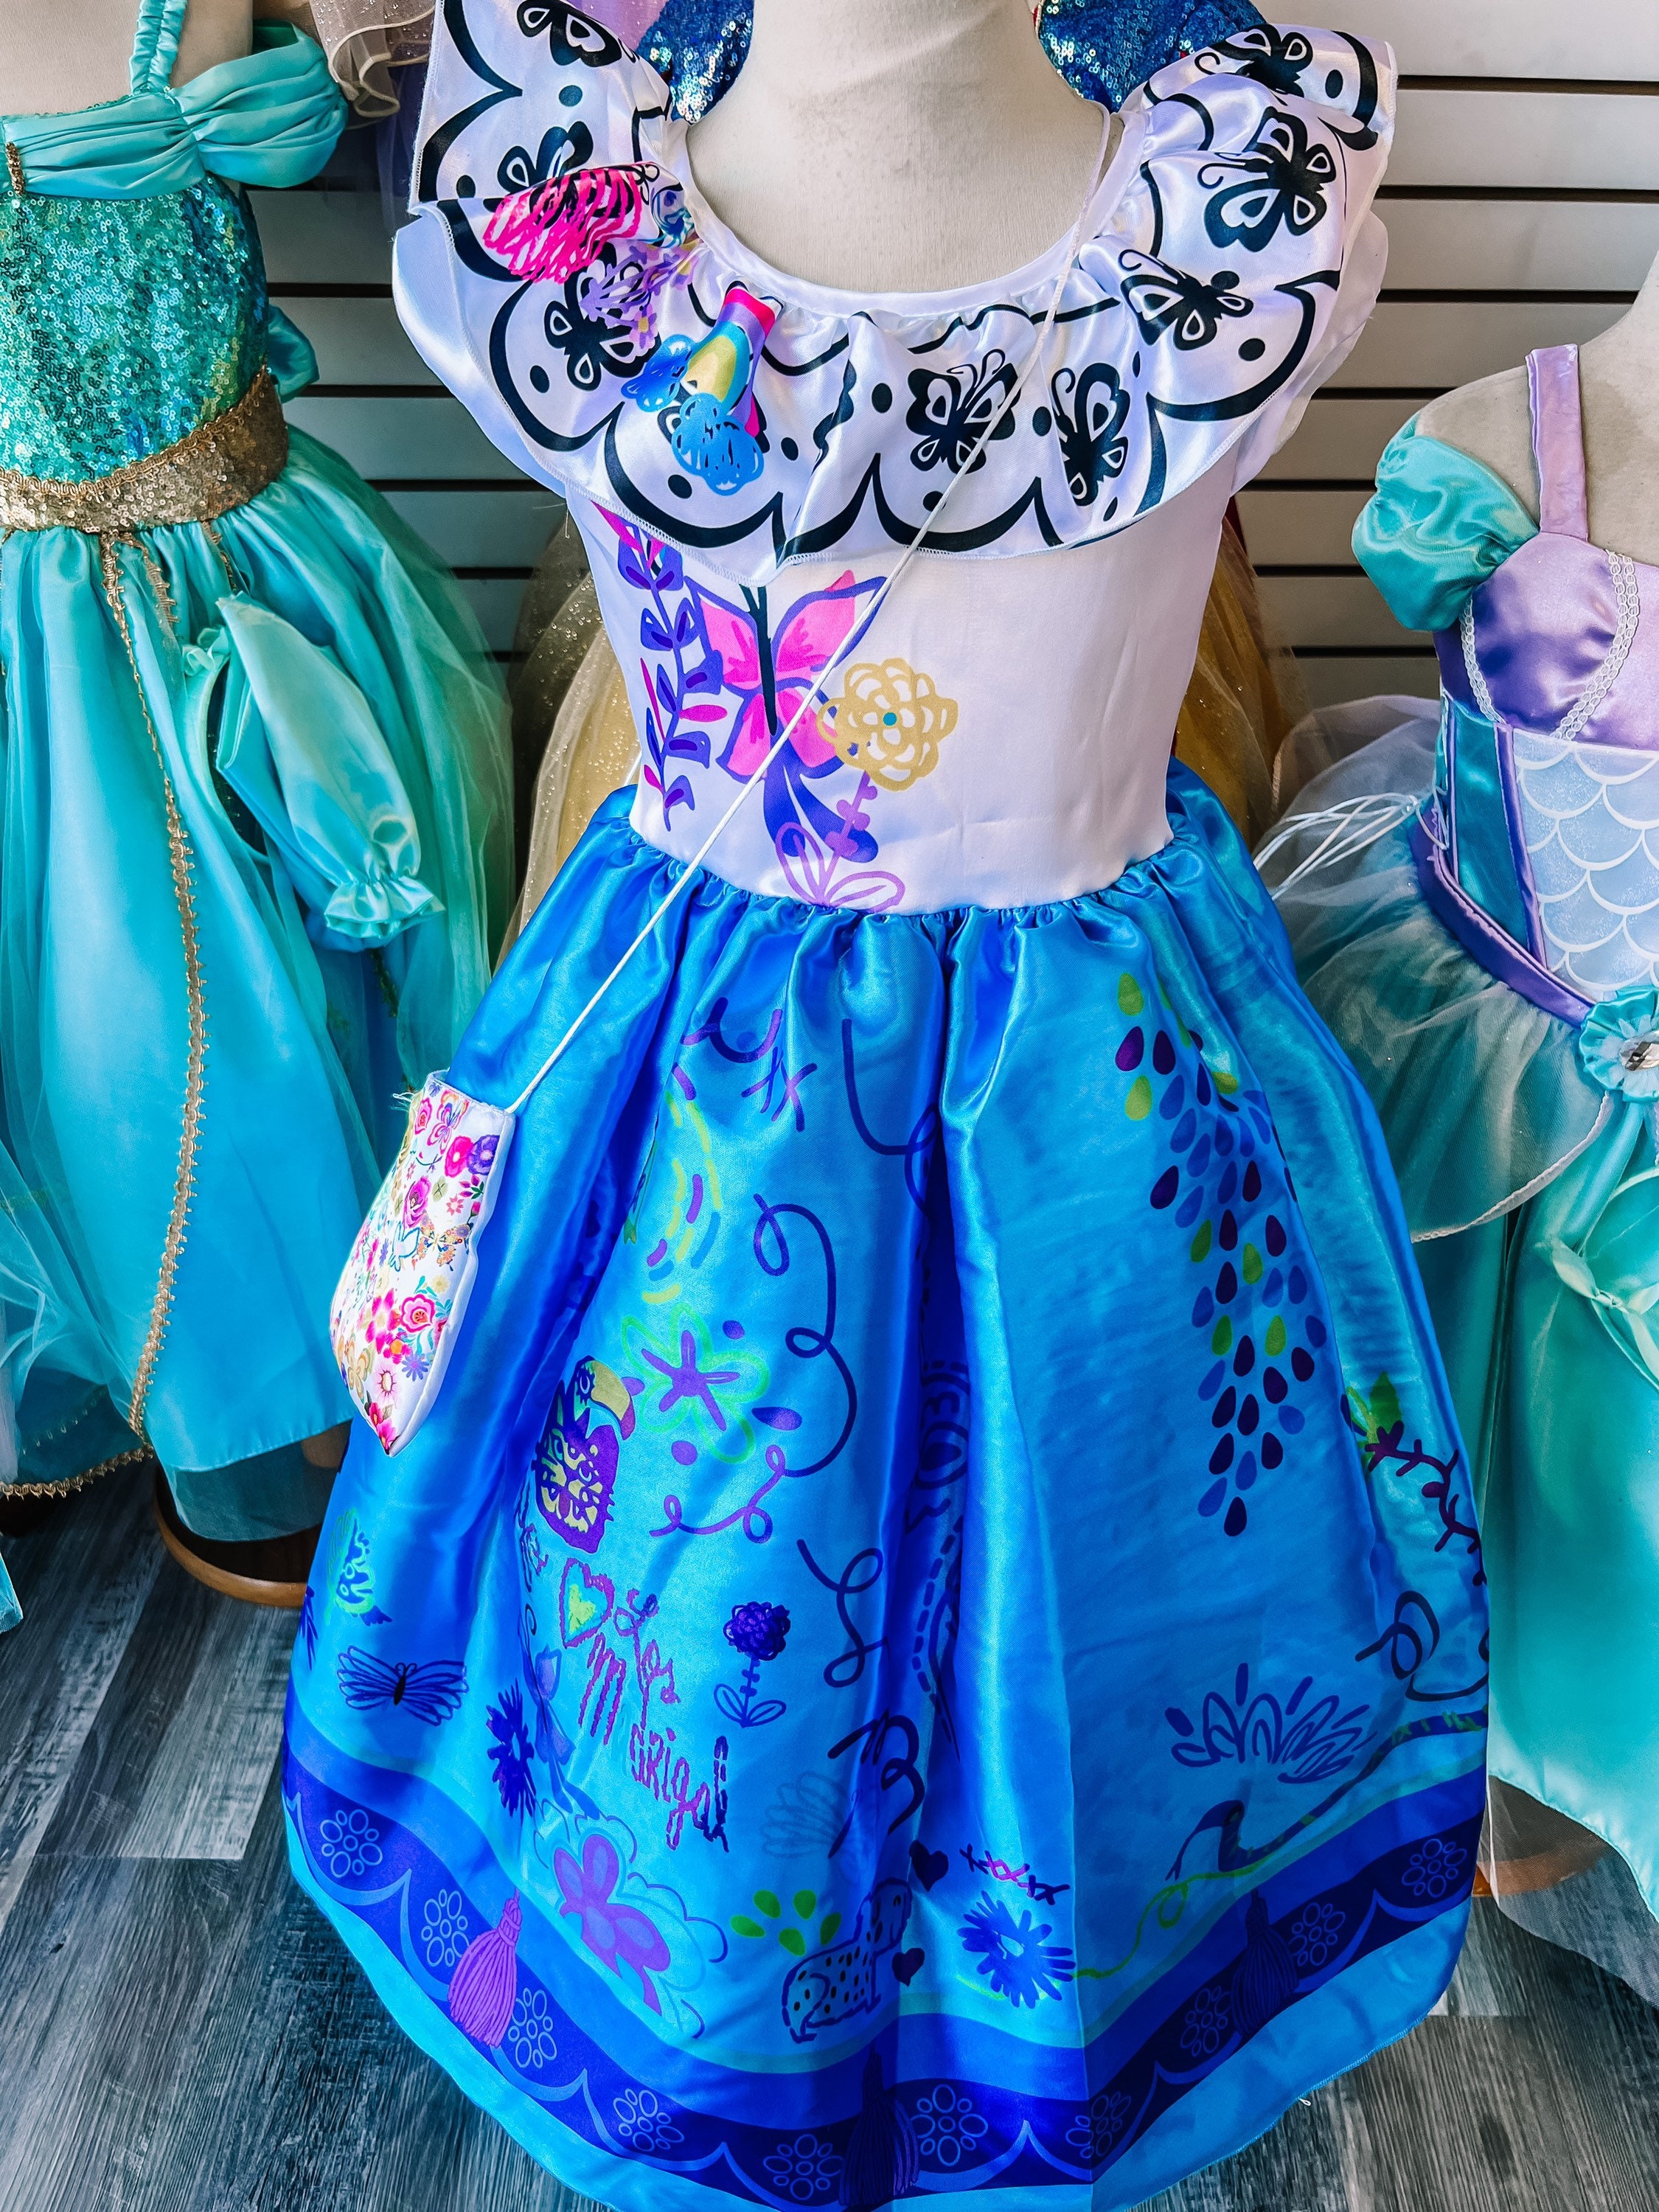 Disney Encanto Isabella filles Costume princesse robe ensemble